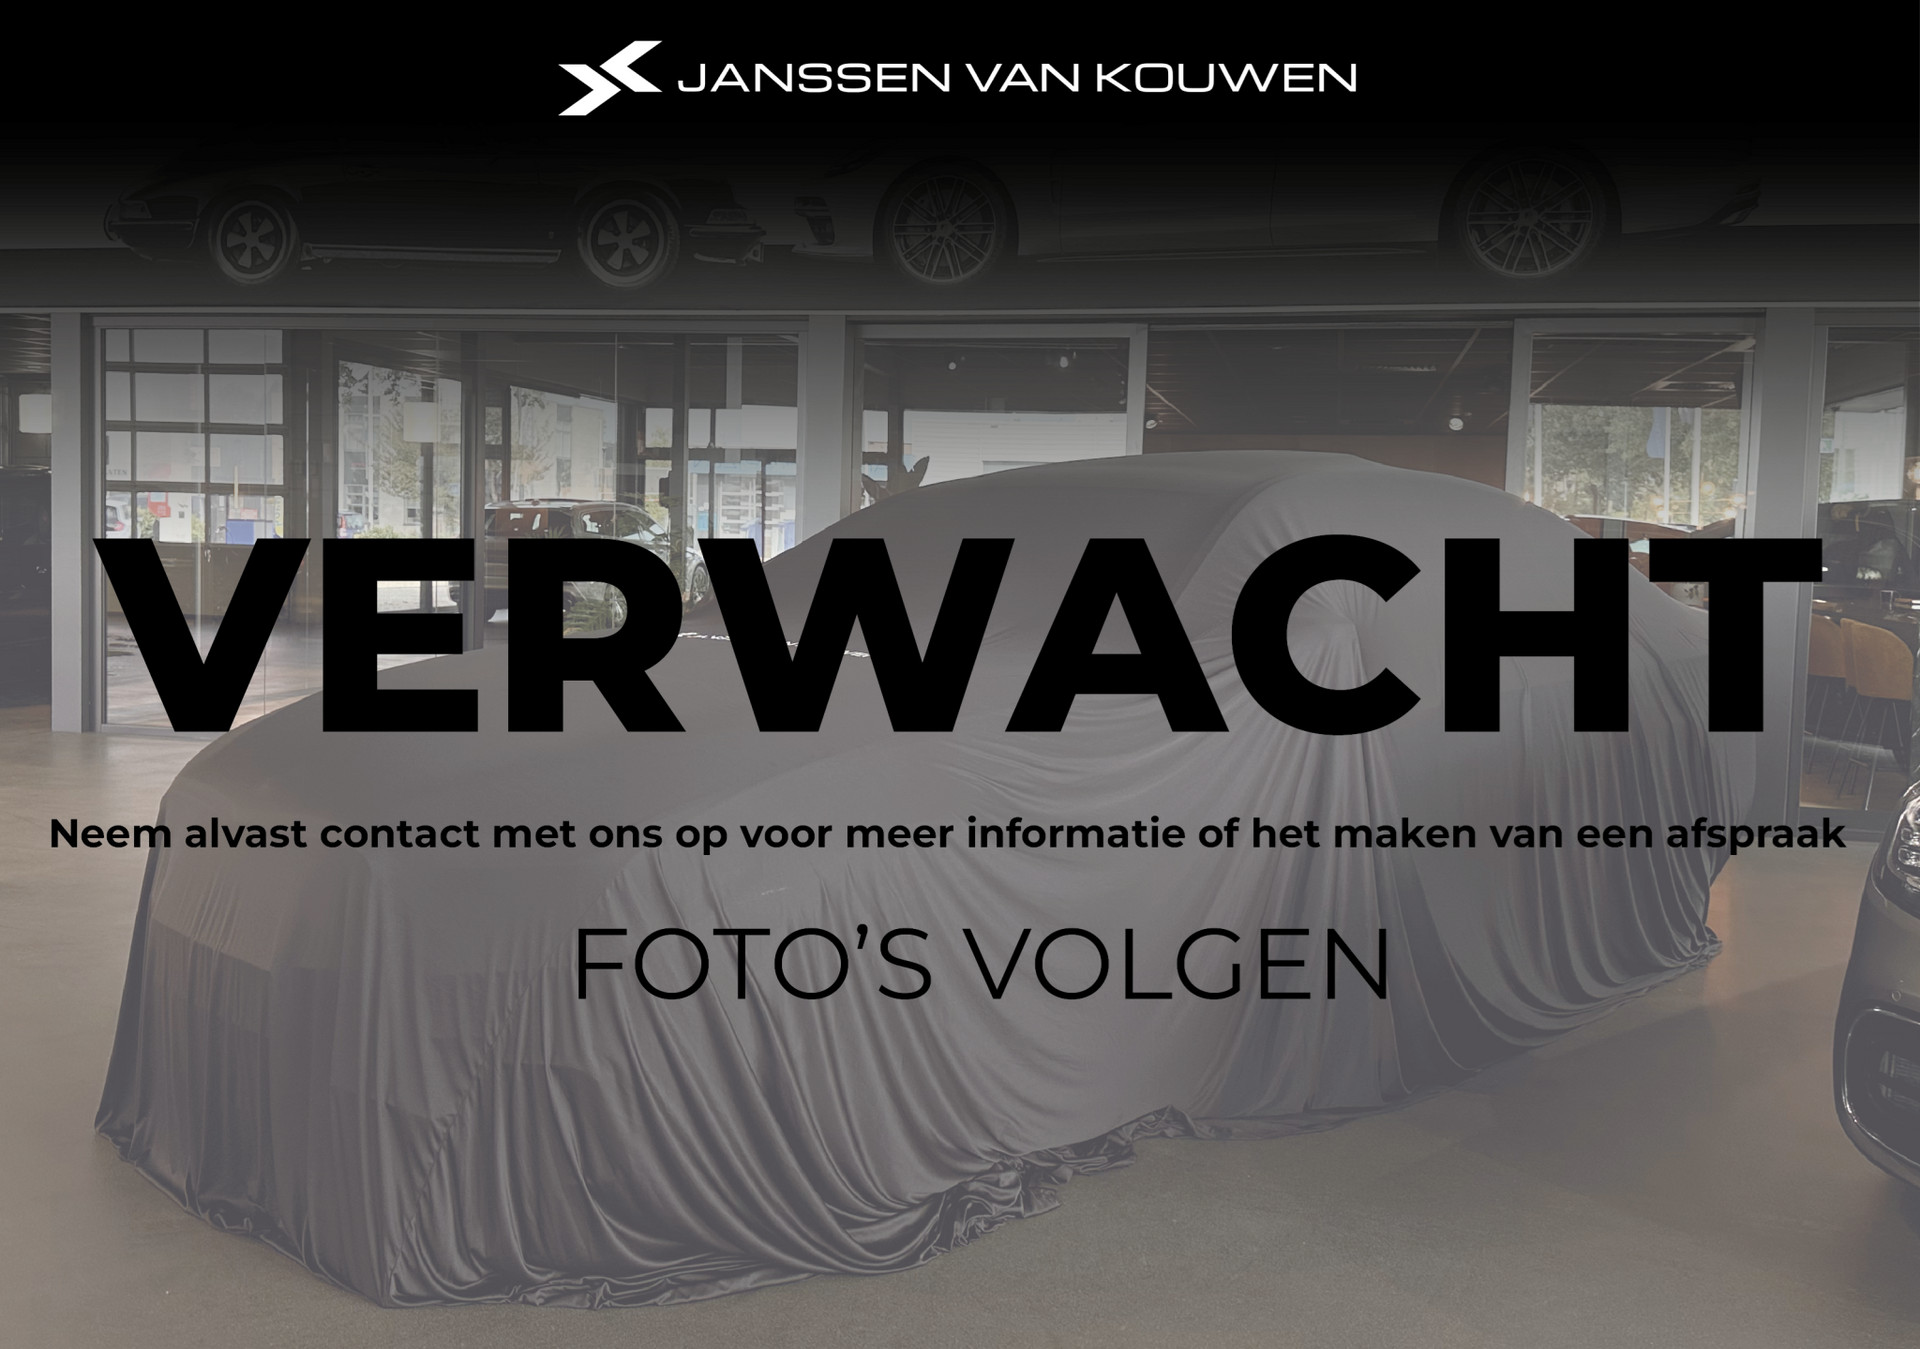 Citroen C3 1.2 PureTech C-Series / JVK Citroën deals / Binnen 2 week van April Nu inschrijven !!!